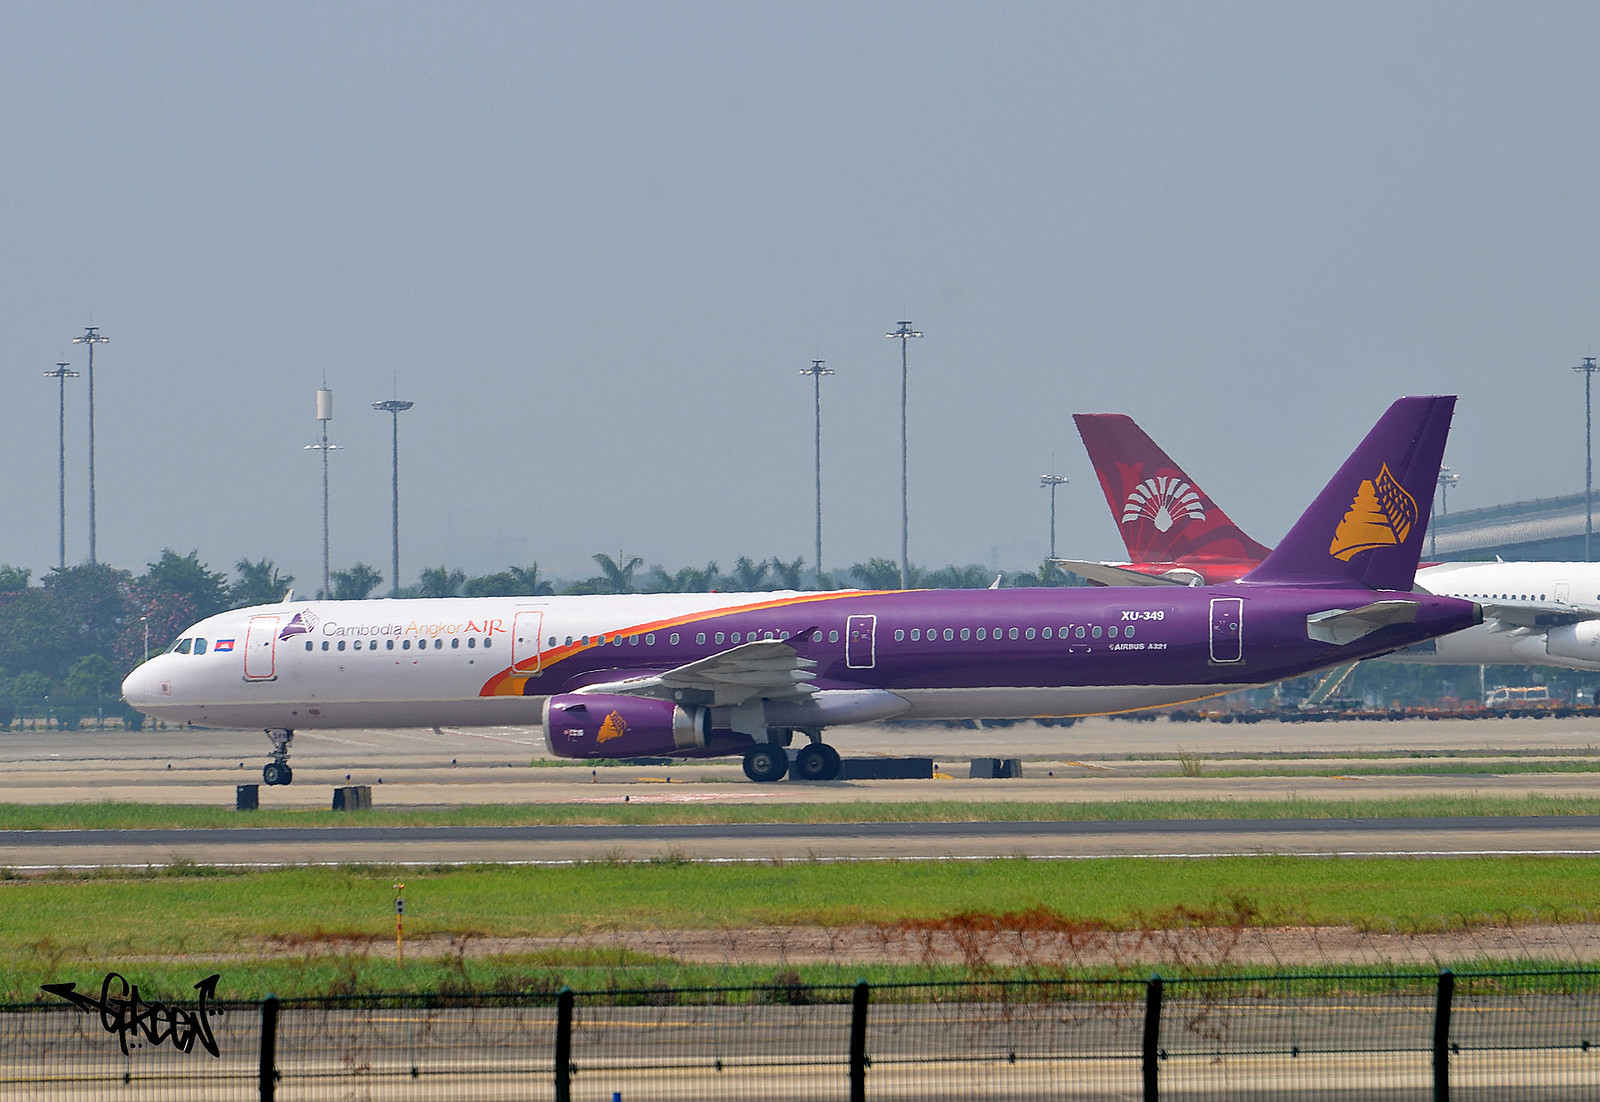 #Mr Green's Air#ANGKOR AIRWAYS (G6 )；Airbus 321;XU-349；Guangzhou Baiyun International Airport (CAN)